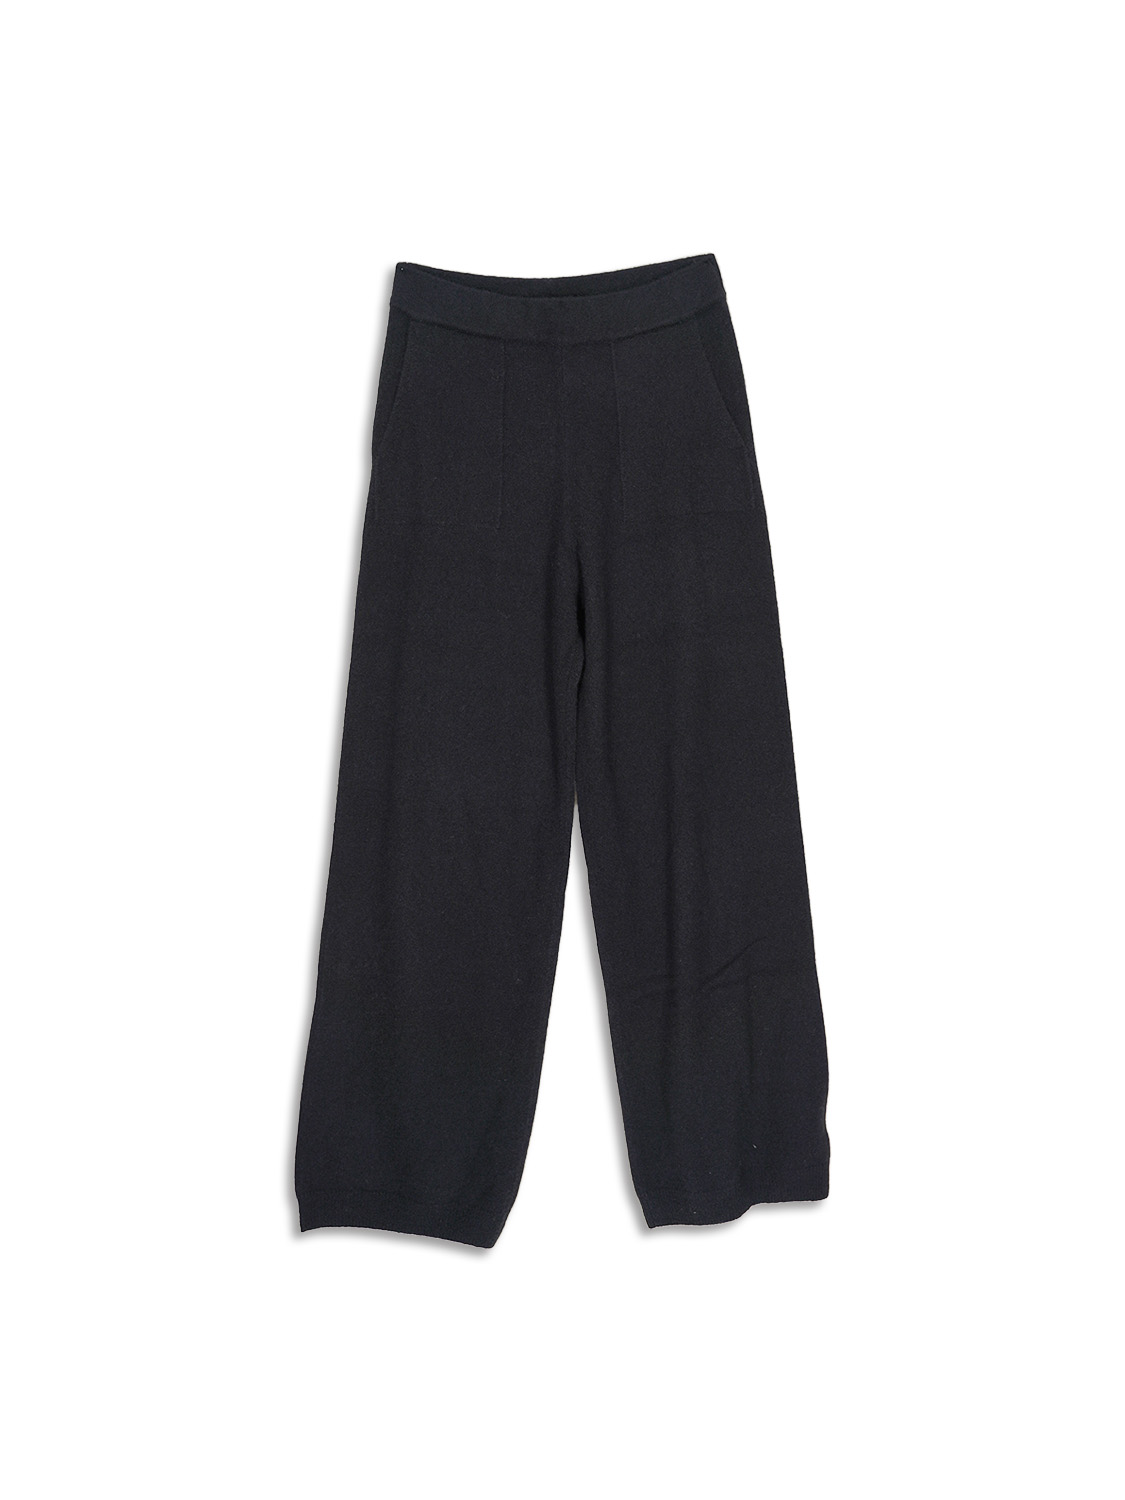 Sanoe - Marlene pants with elastic waistband in cashmere